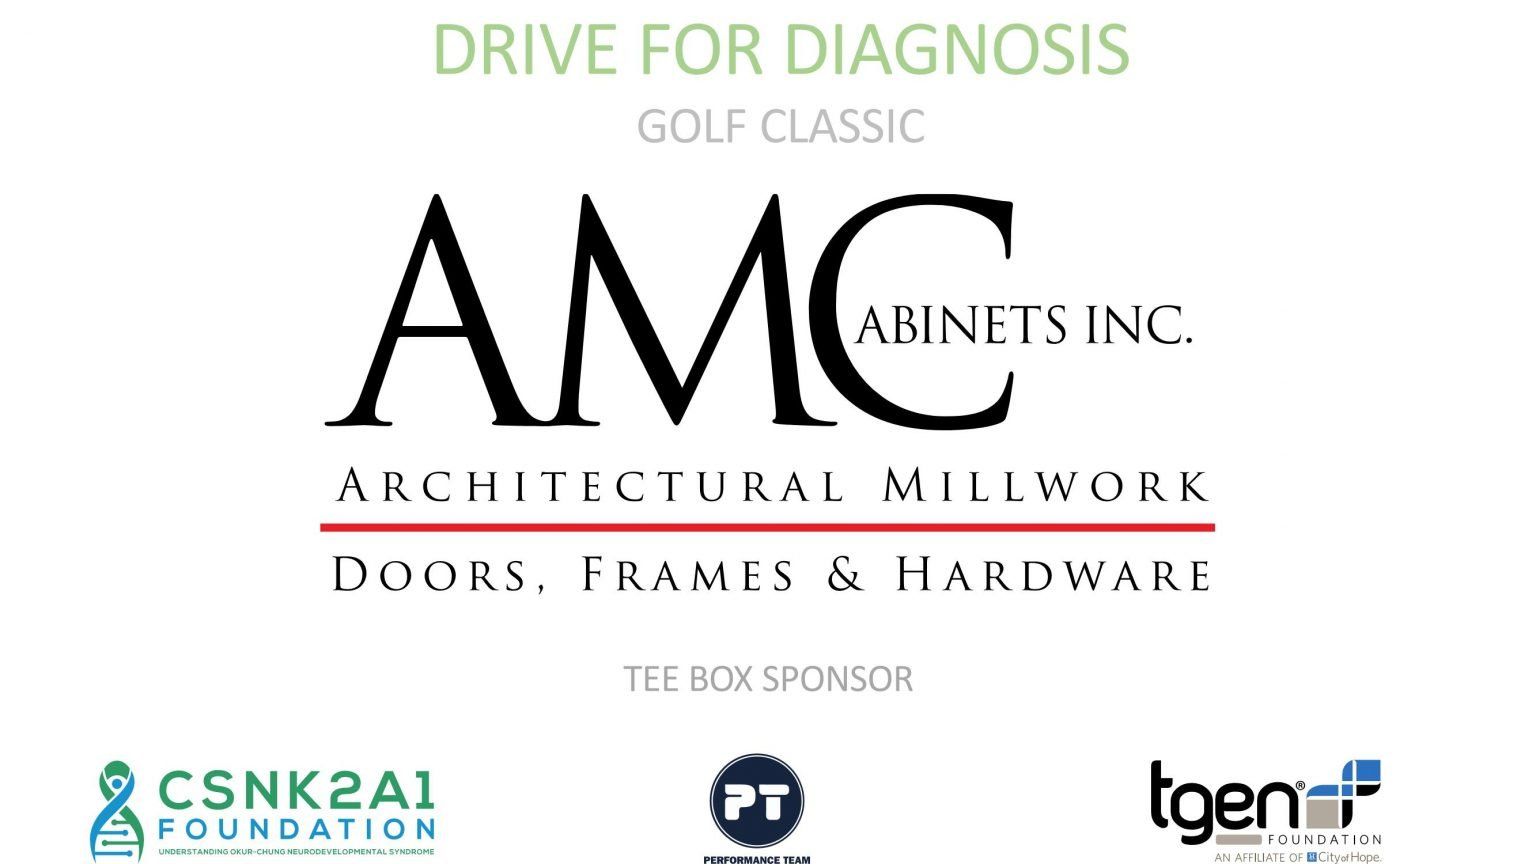 Tee Box Sponsor - AMC Cabinets Inc.